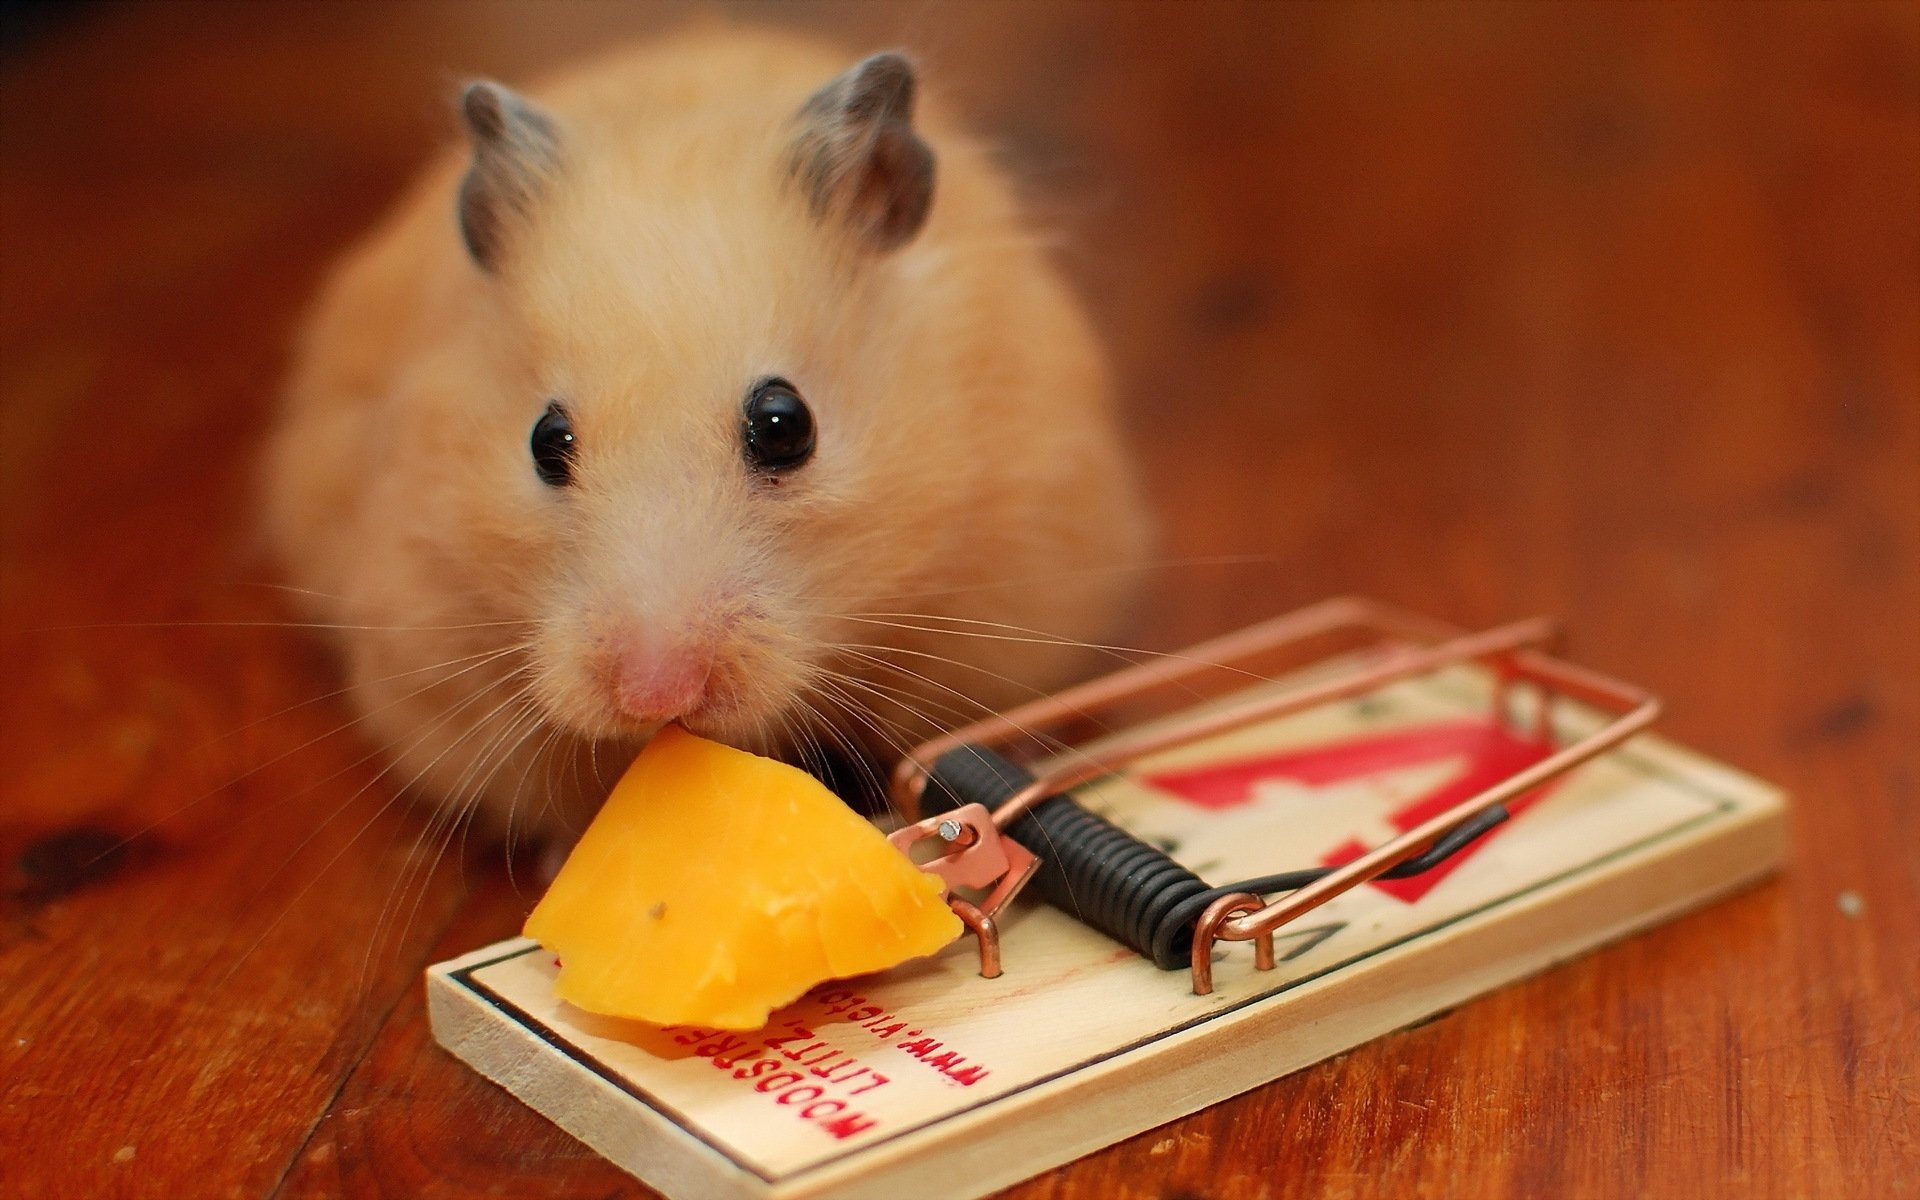 HD hamster wallpapers, Hamster cuteness overload, Adorable and furry, Fuzzy little friends, 1920x1200 HD Desktop